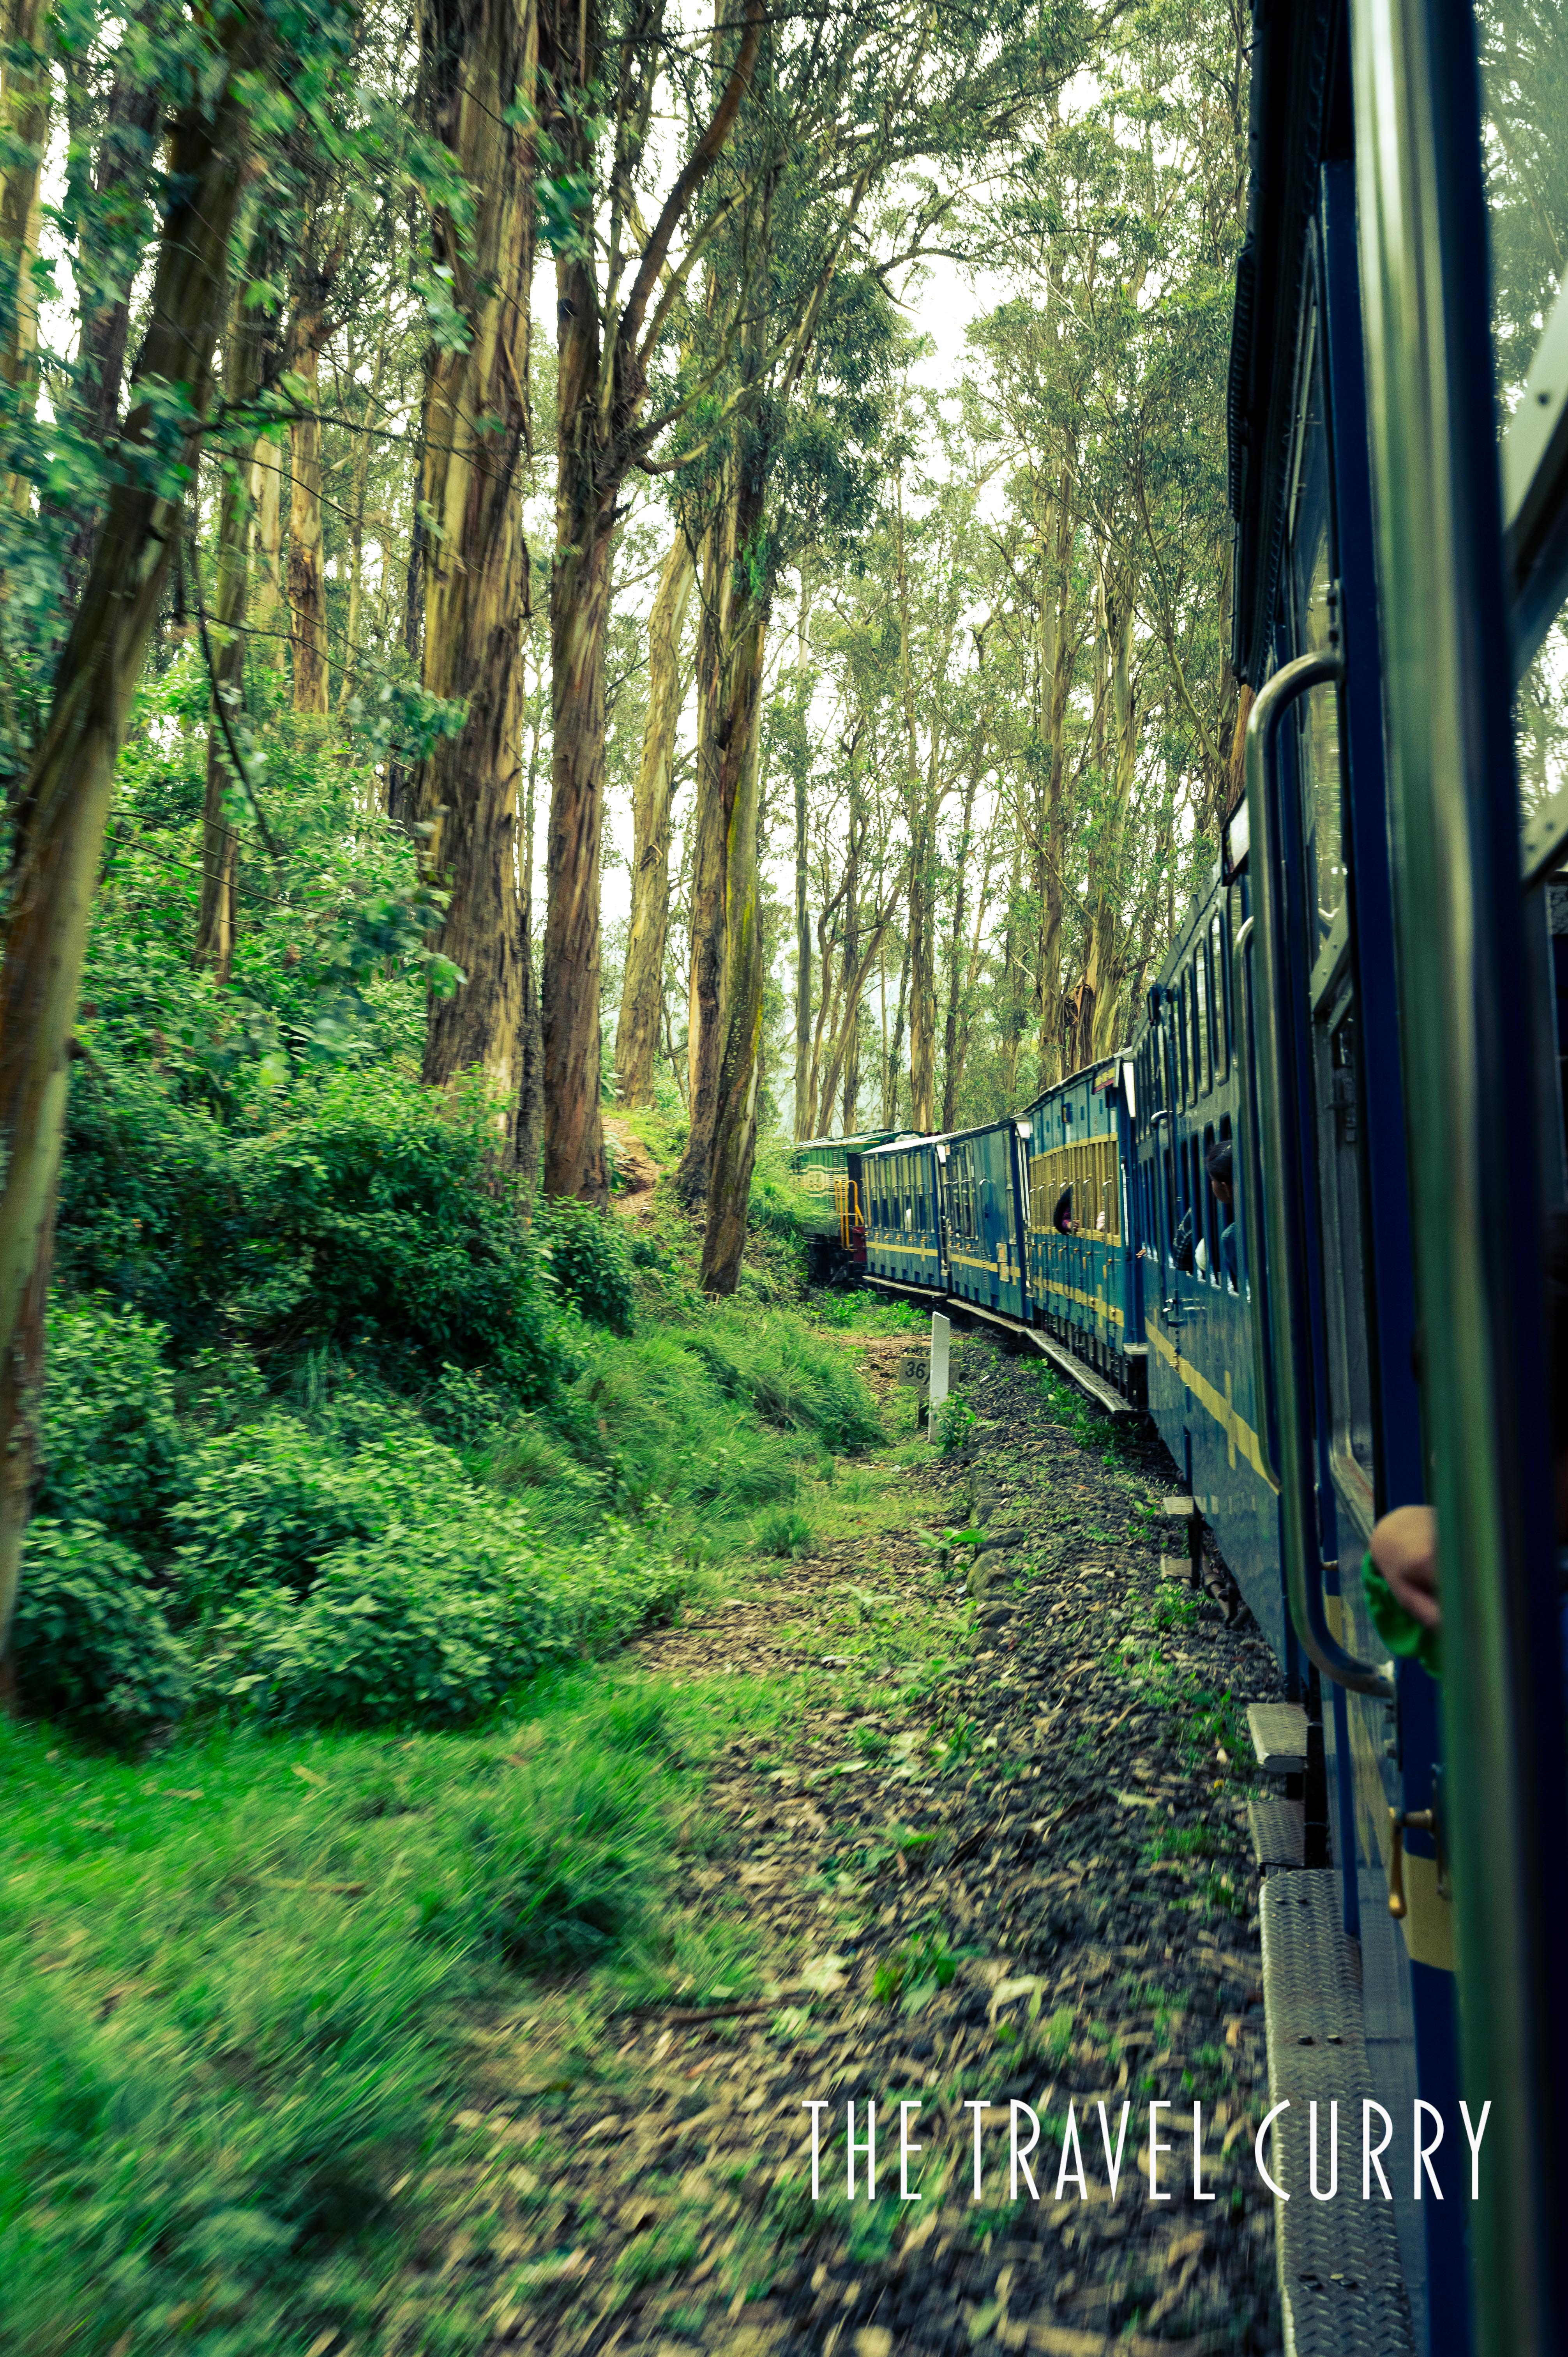 Nilgiri Mountain Railways in Coonoor